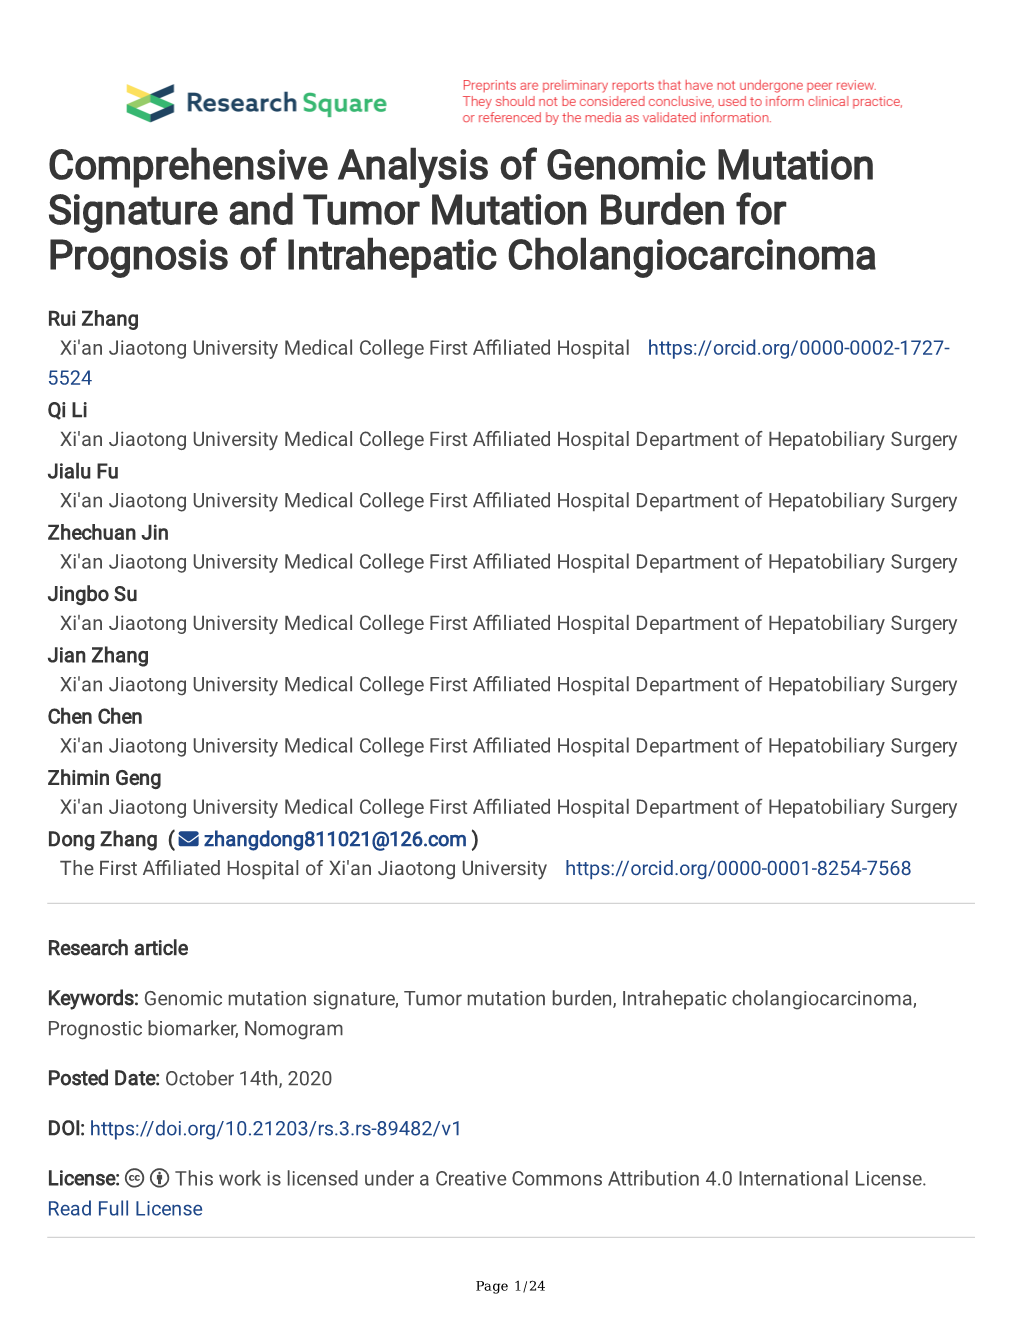 Comprehensive Analysis of Genomic Mutation Signature and Tumor Mutation Burden for Prognosis of Intrahepatic Cholangiocarcinoma